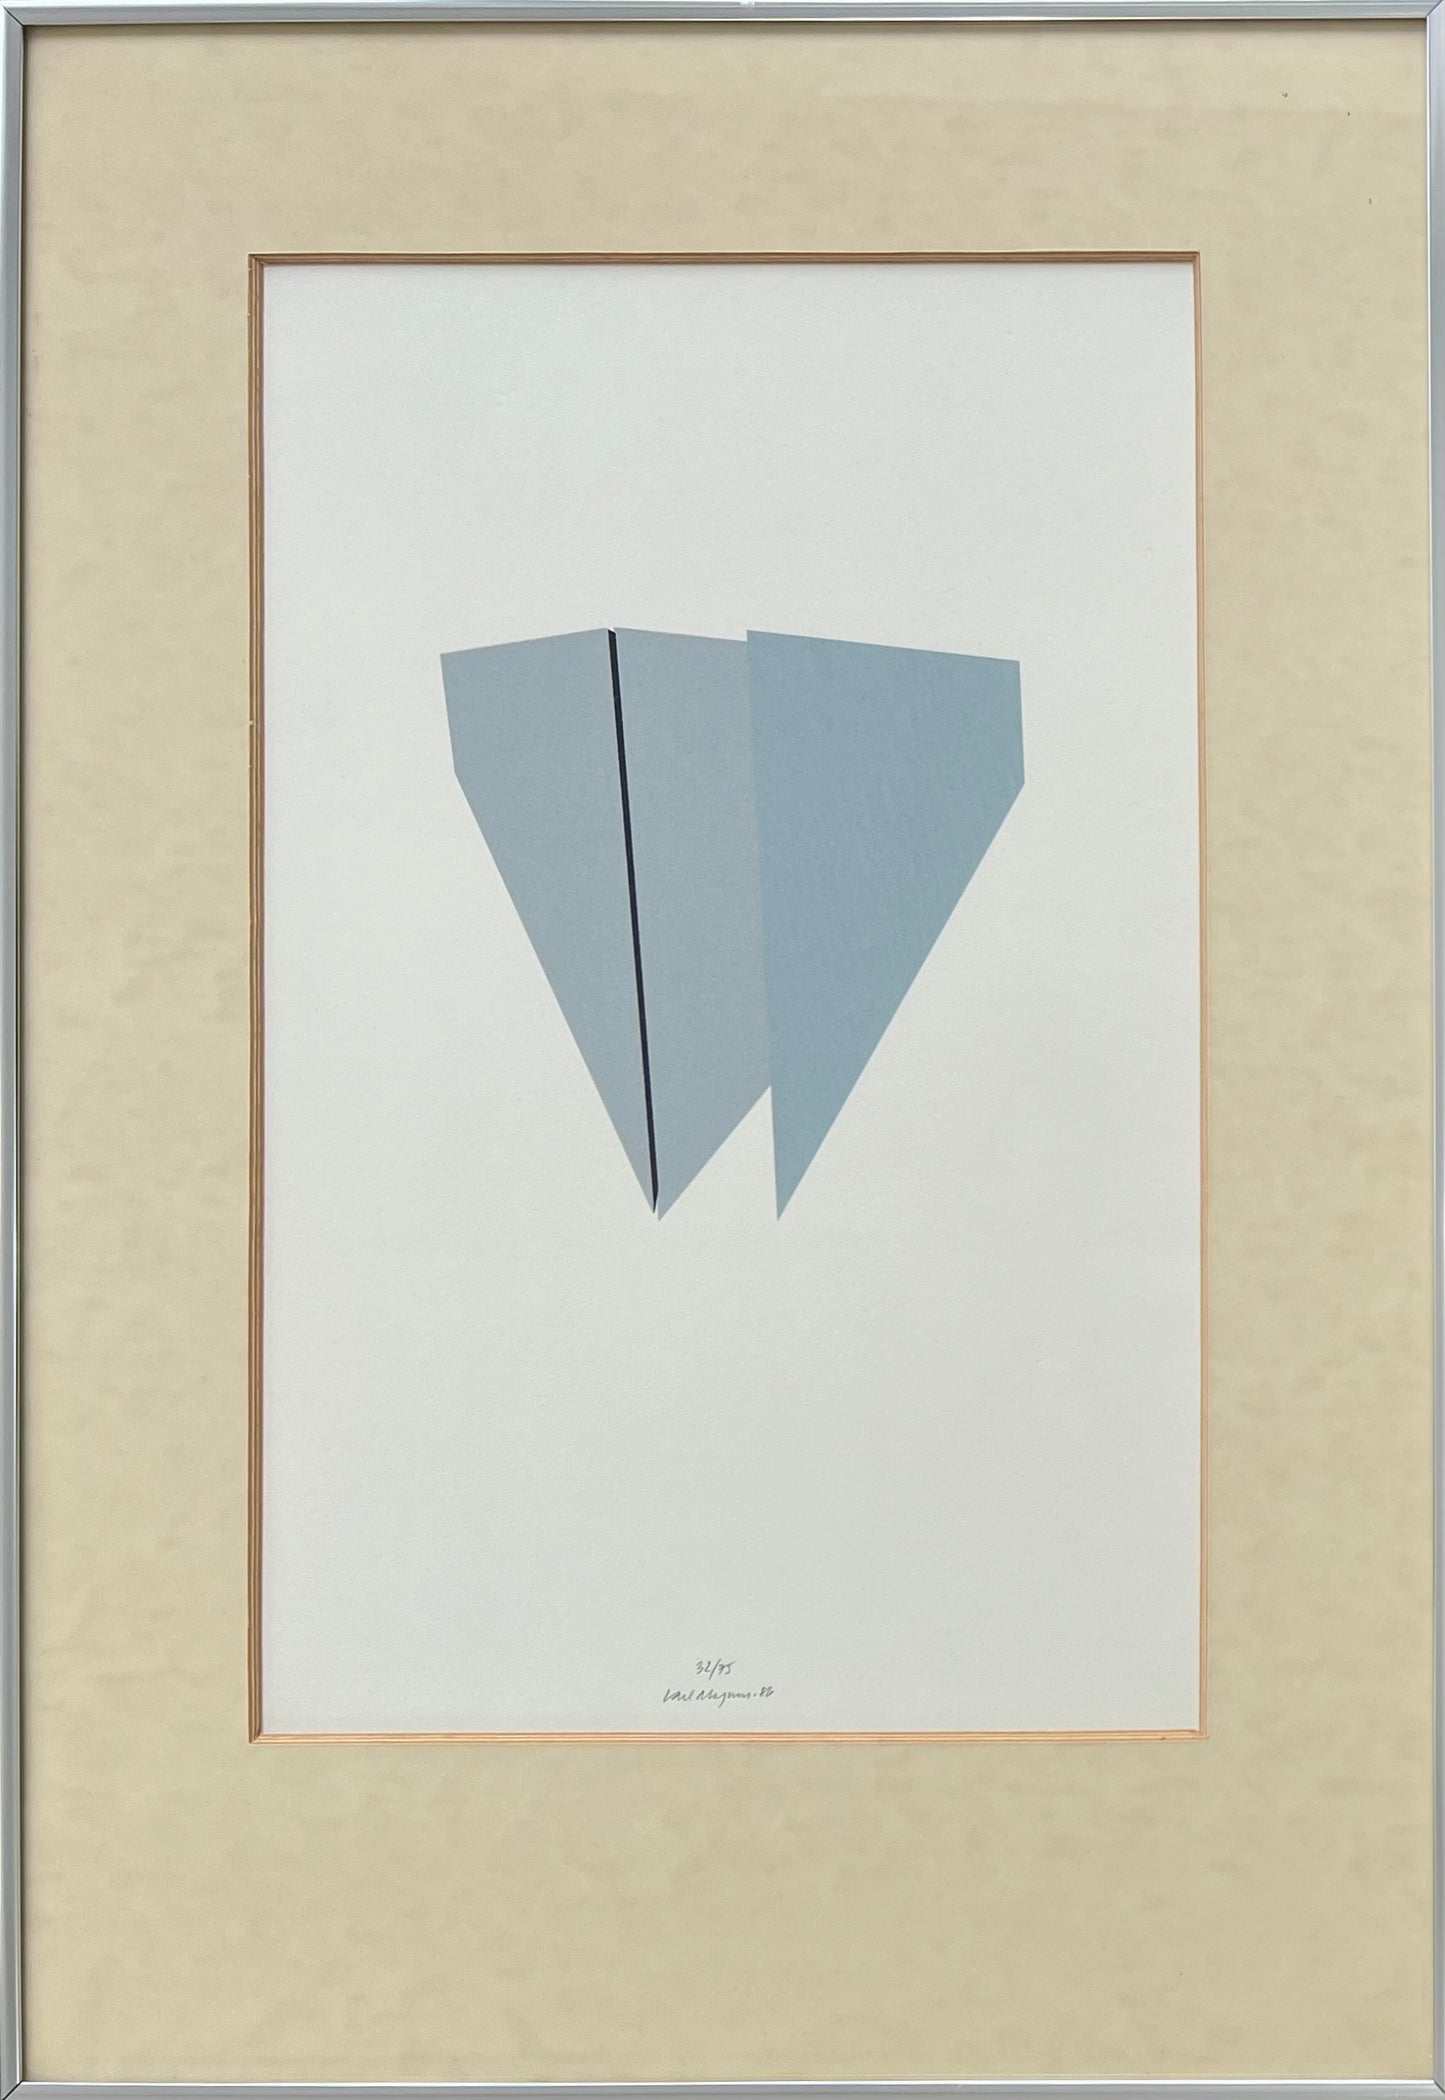 Carl Magnus. Composition, 1986